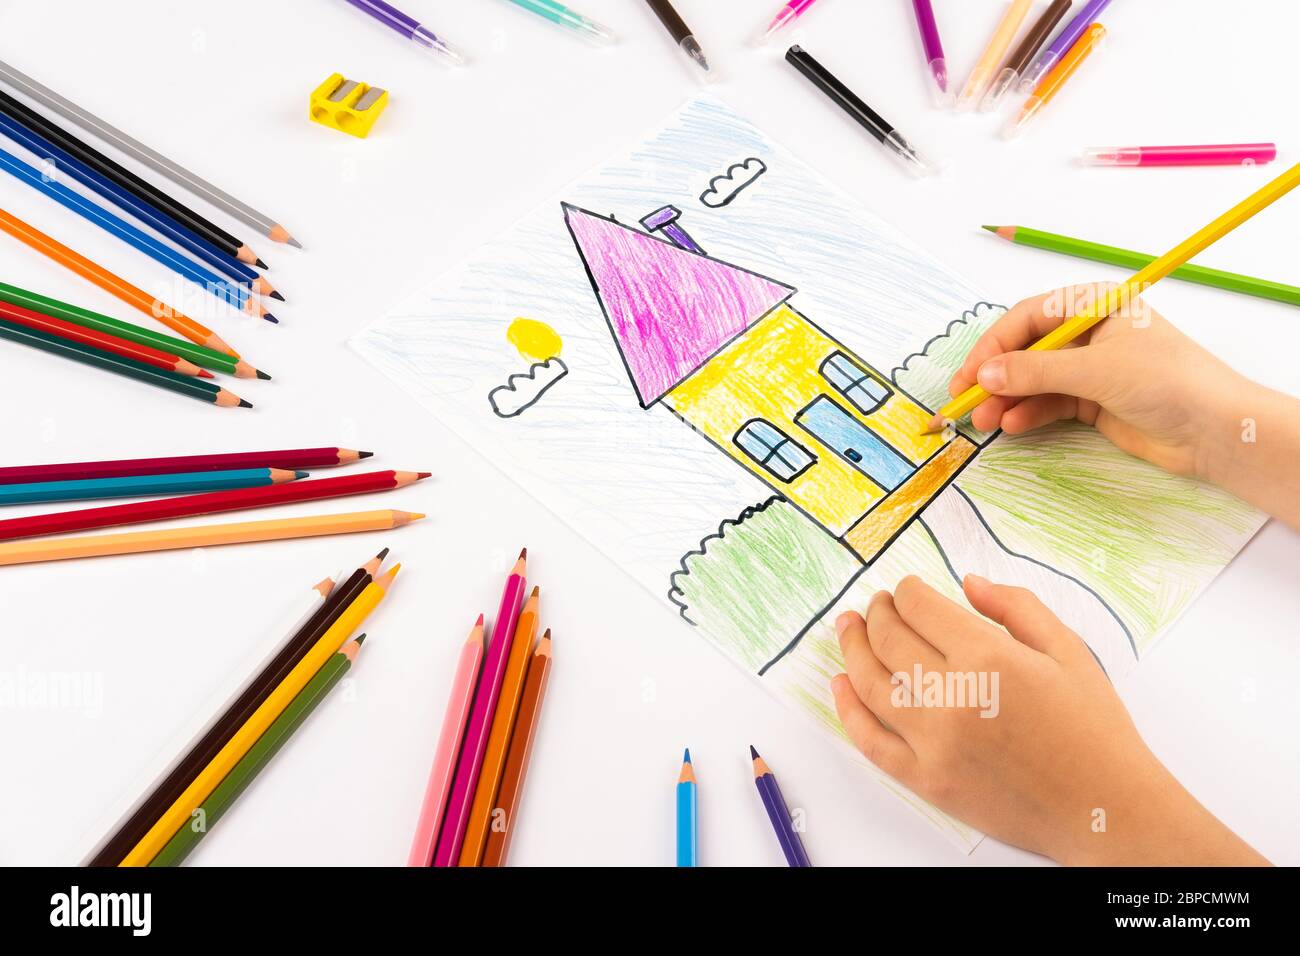 A child draws a house. Homemade creativity. Stock Photo